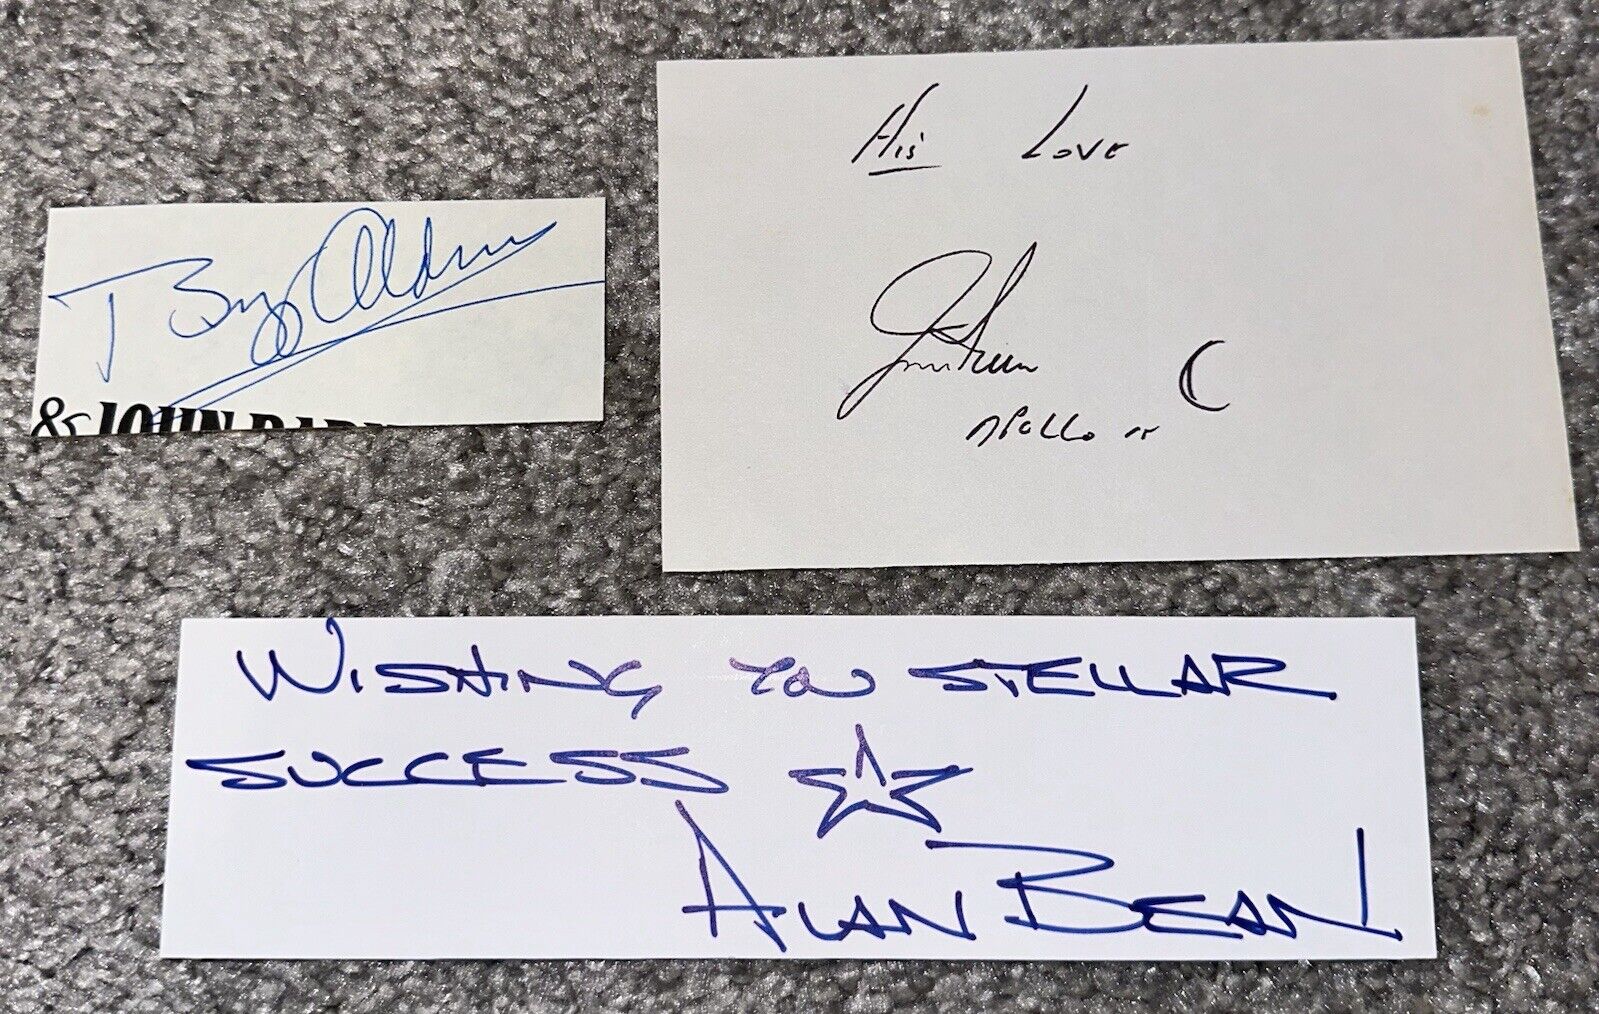 Lot of NASA Apollo astronaut Moonwalker signed autographs - Aldrin Bean Irwin